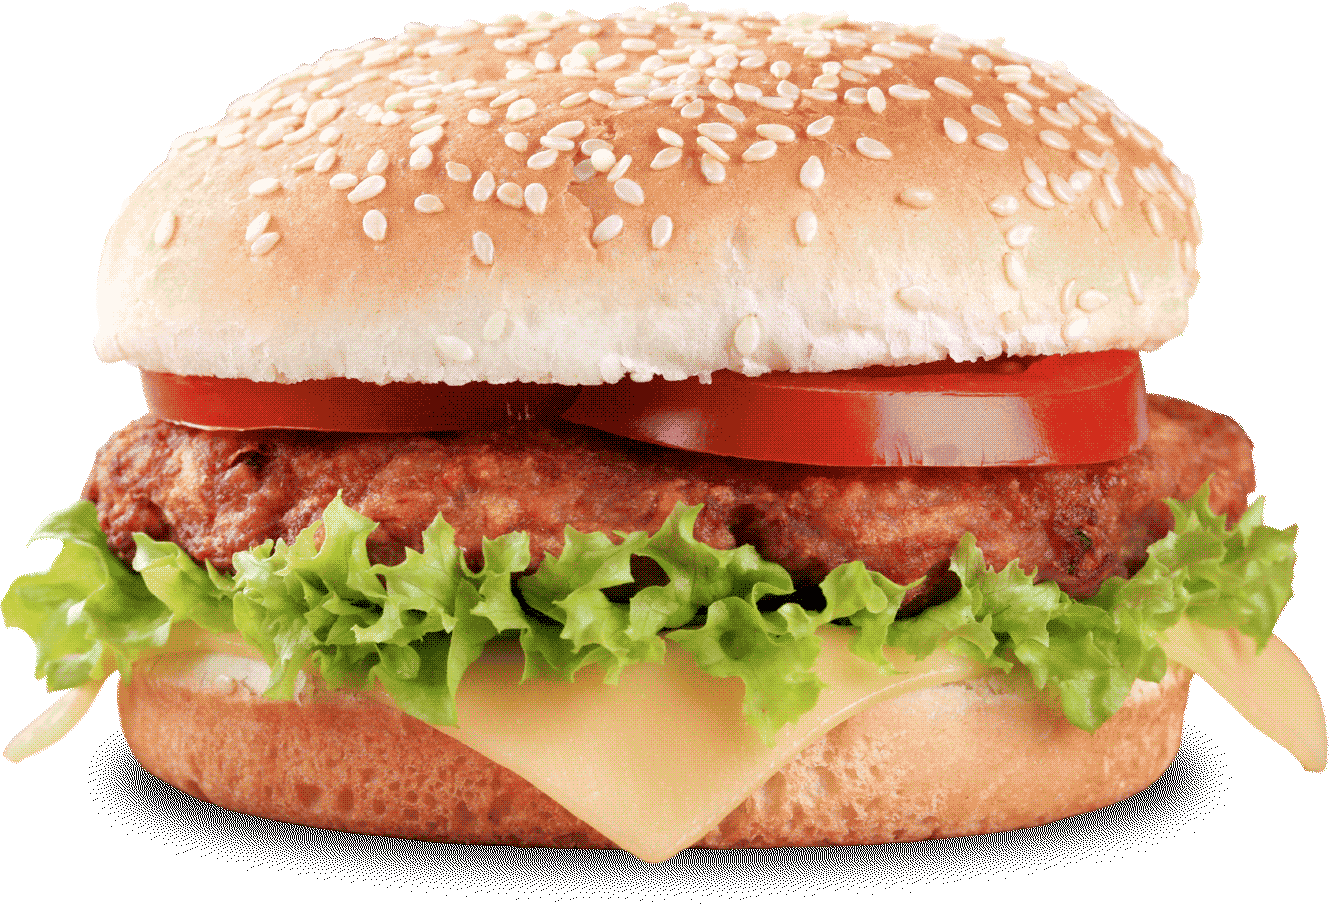 Download Burger HQ PNG Image | FreePNGImg